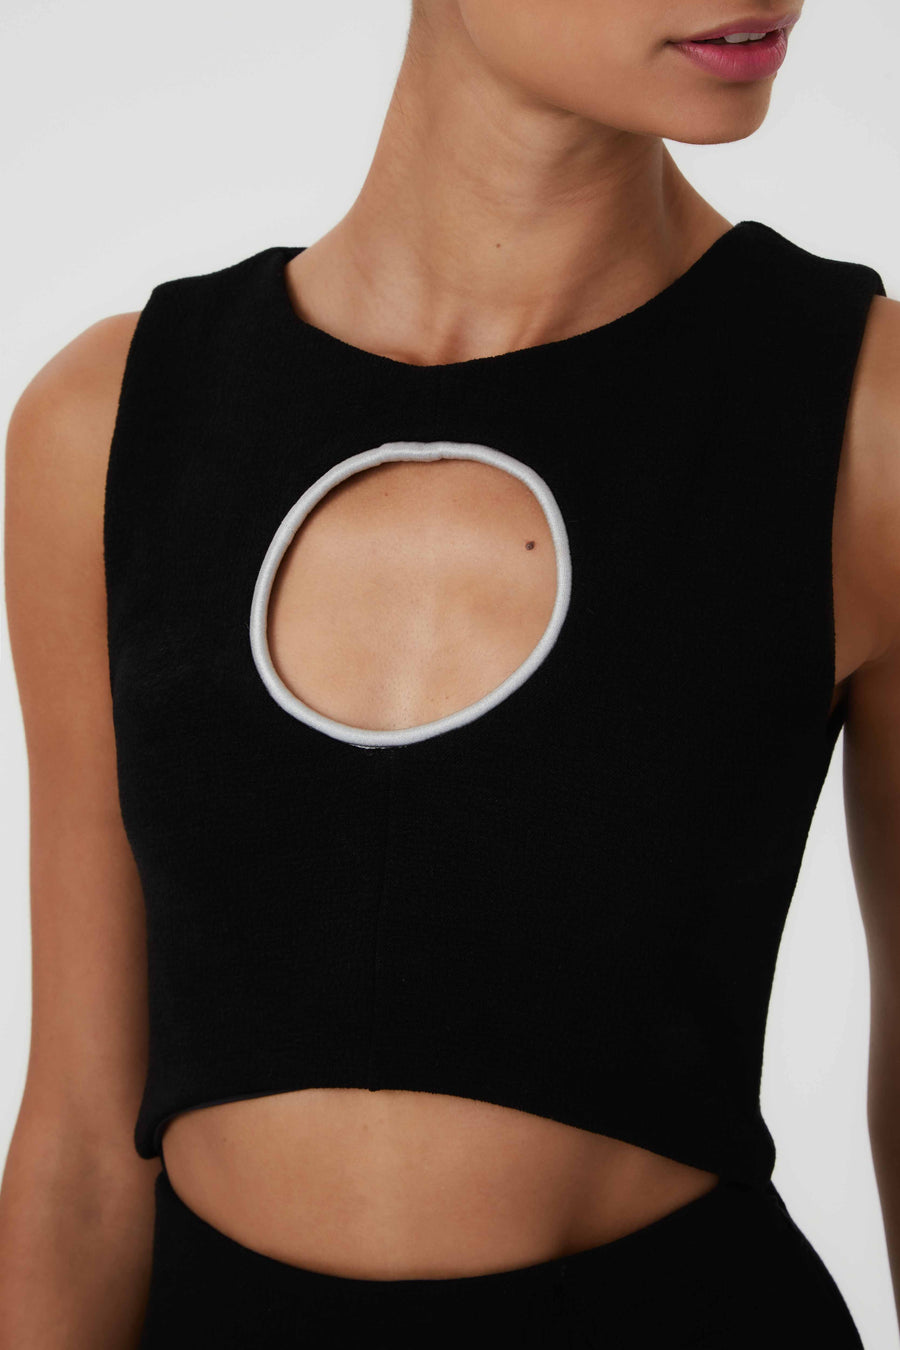 Black circle cut out dress